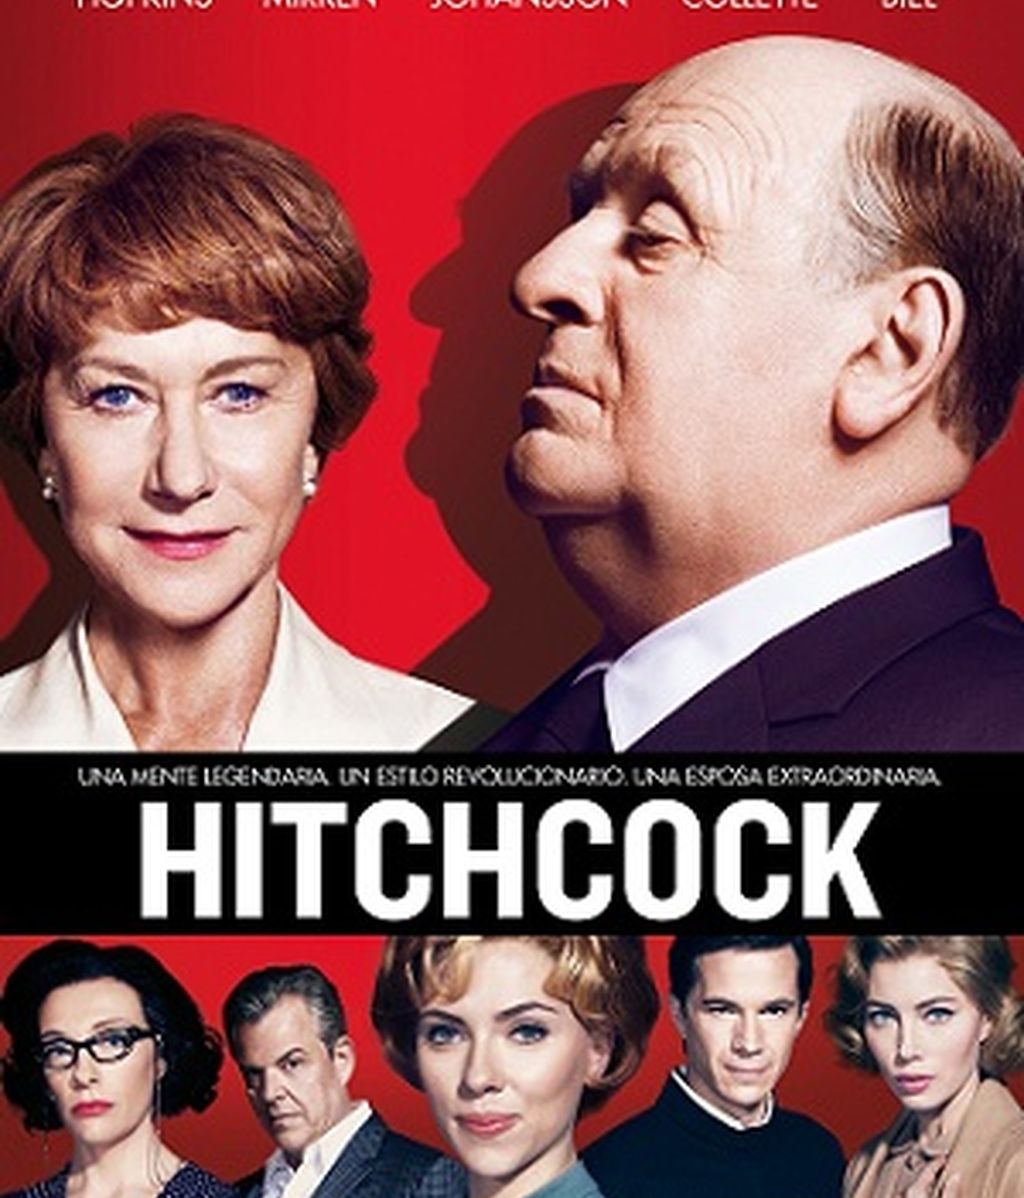 Hitchcock, protagonista de la cartelera